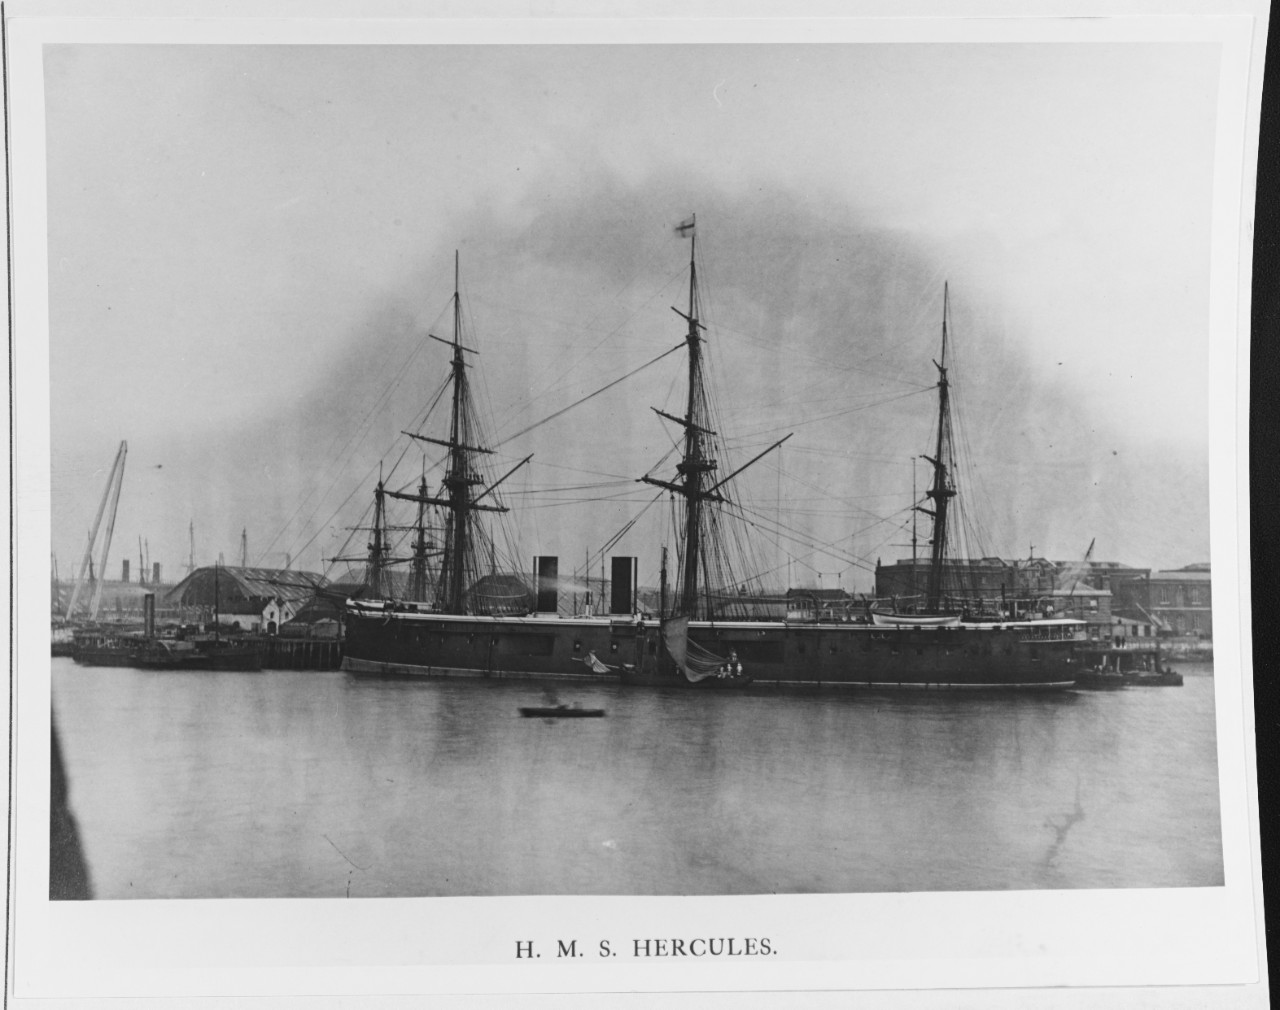 HMS HERCULES (BRITISH BATTLESHIP, 1868)